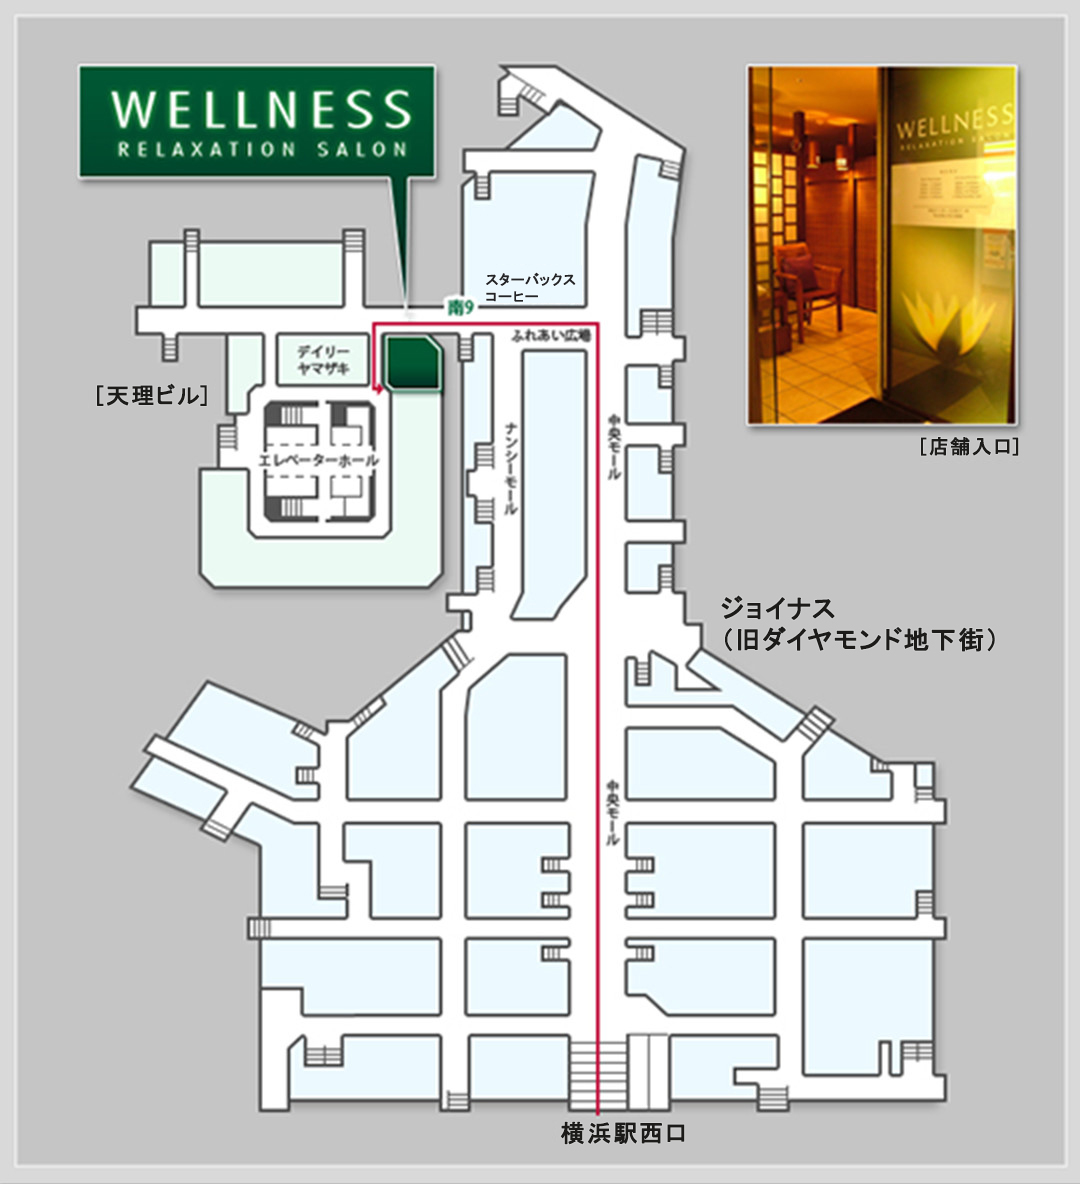 WELLNESSへのアクセス方法　横浜駅西口のダイヤモンド地下街、中央モールを直進していただくと、左手にソフトバンクがございます。ソフトバンクを左折すると天理ビルの地下1階にございます。向かいにデイリーヤマザキがございます。